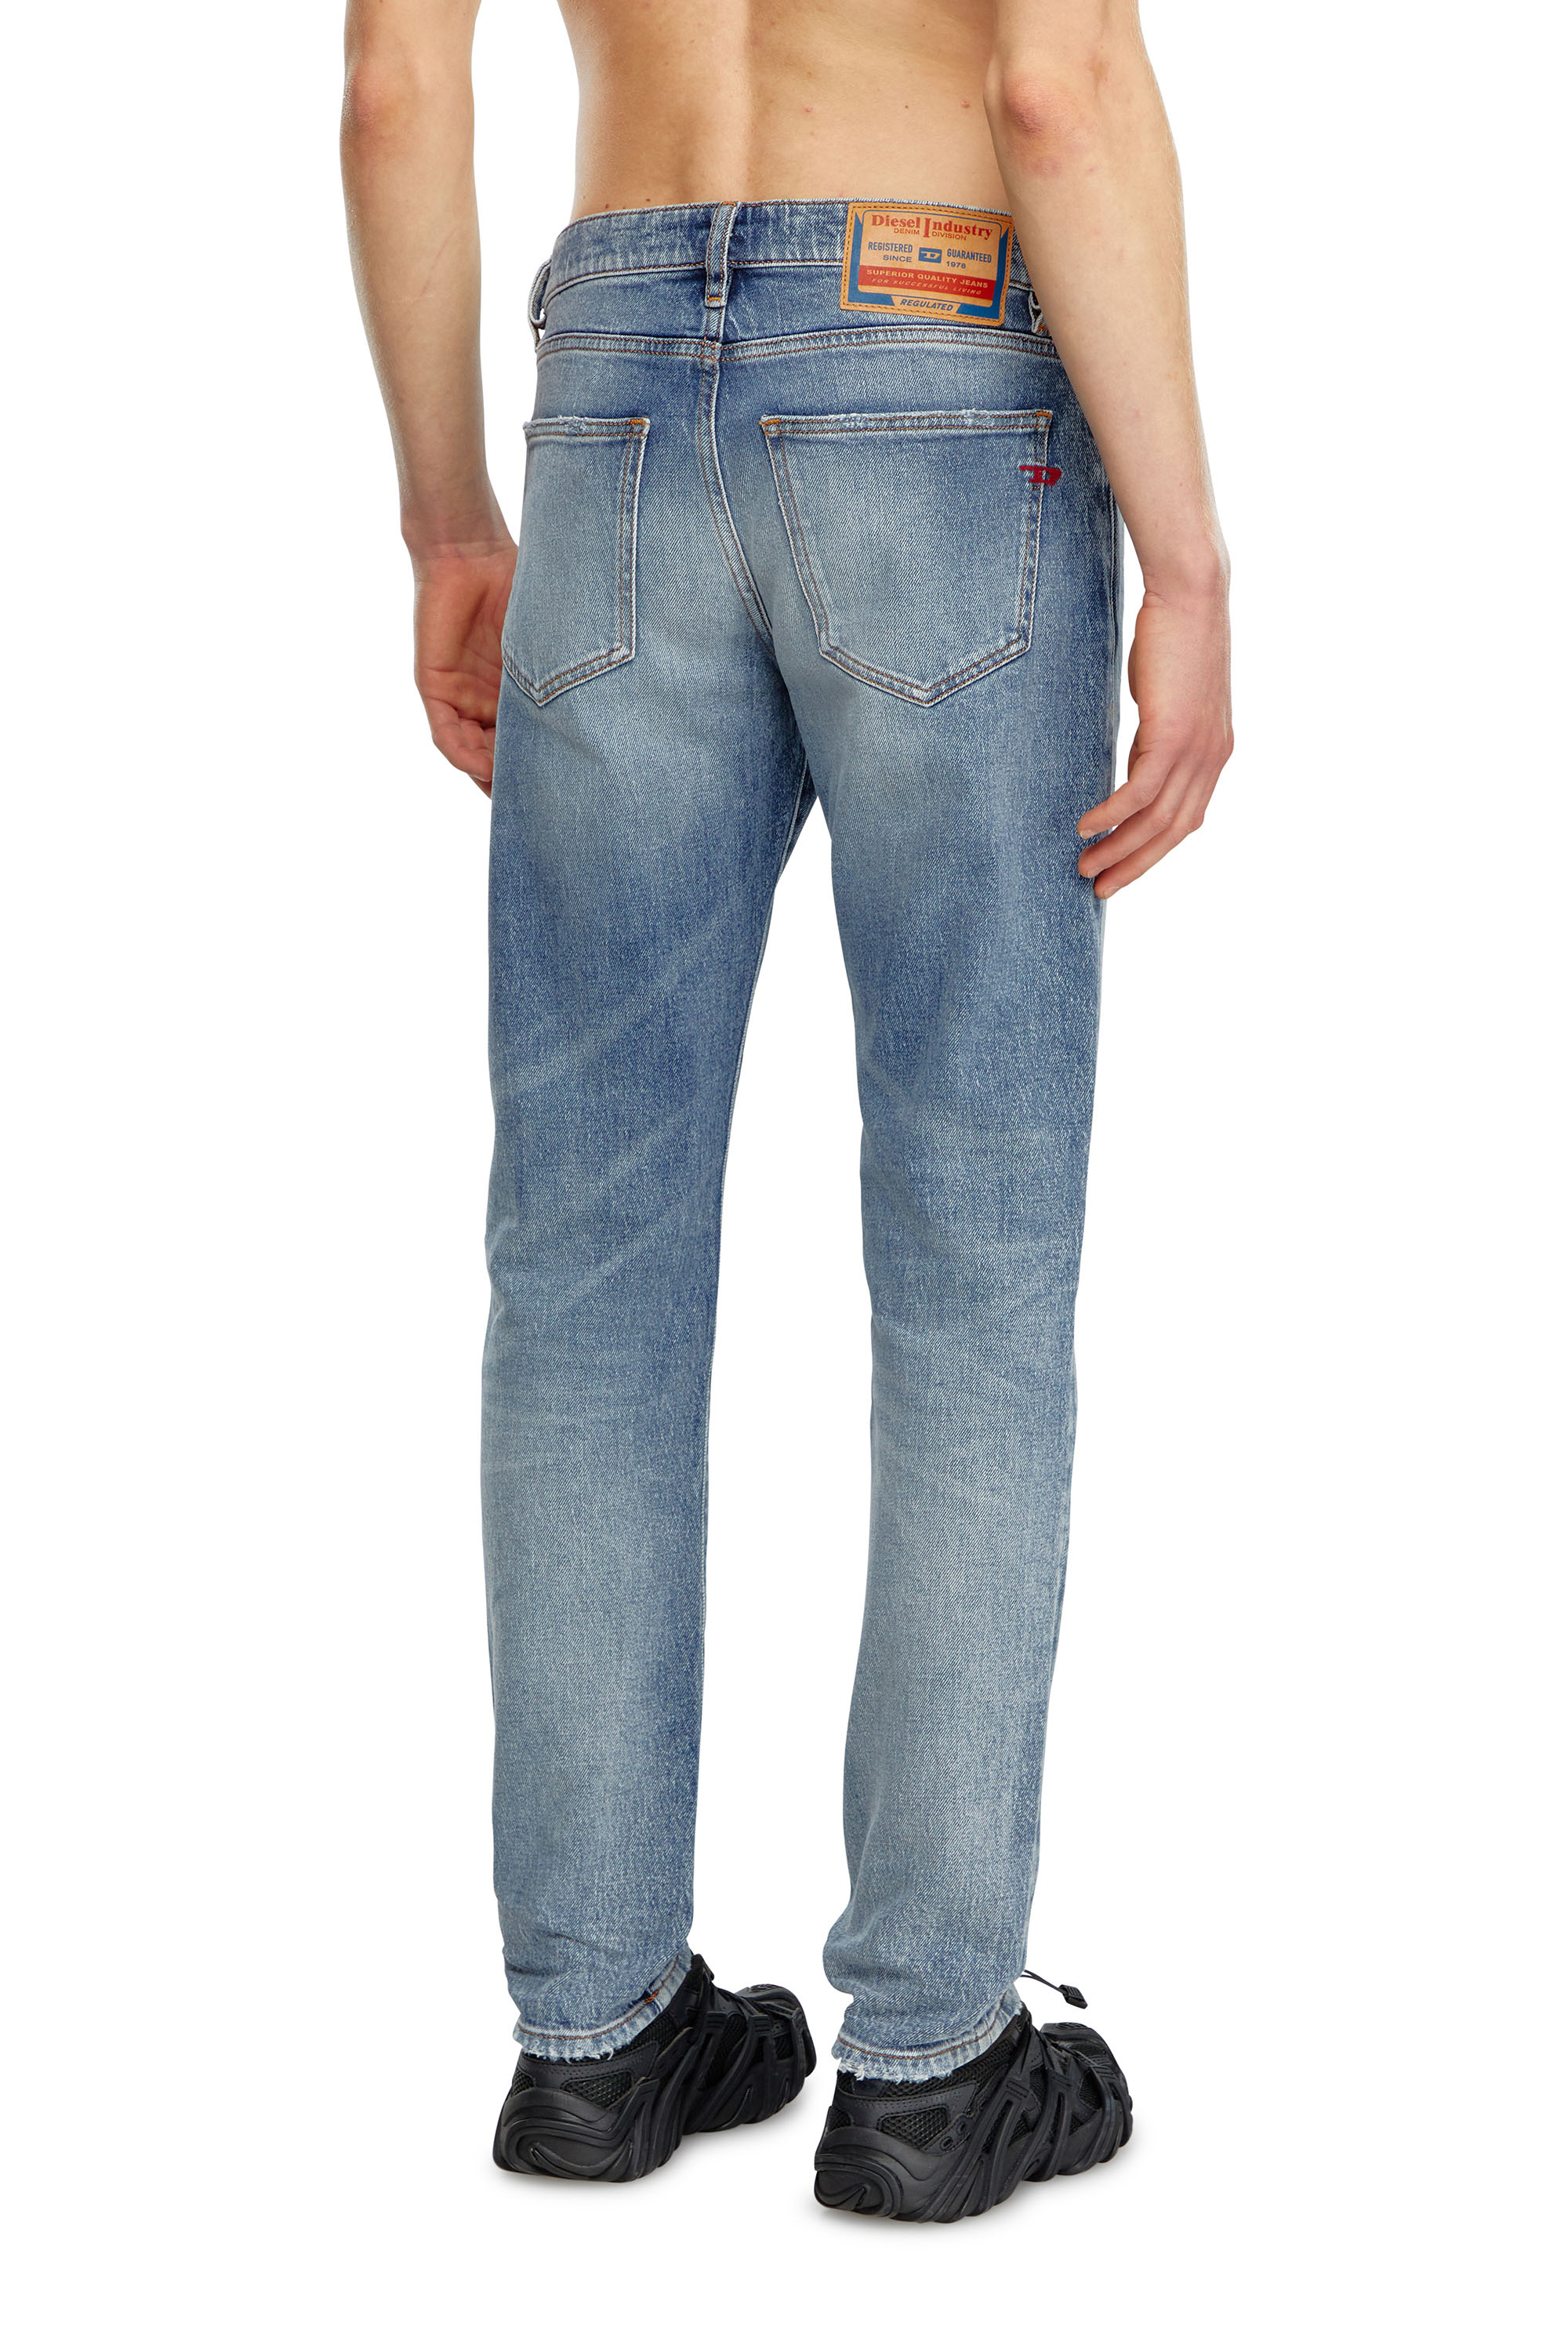 Diesel - Slim Jeans 2019 D-Strukt 09J57, Hombre Slim Jeans - 2019 D-Strukt in Azul marino - Image 4